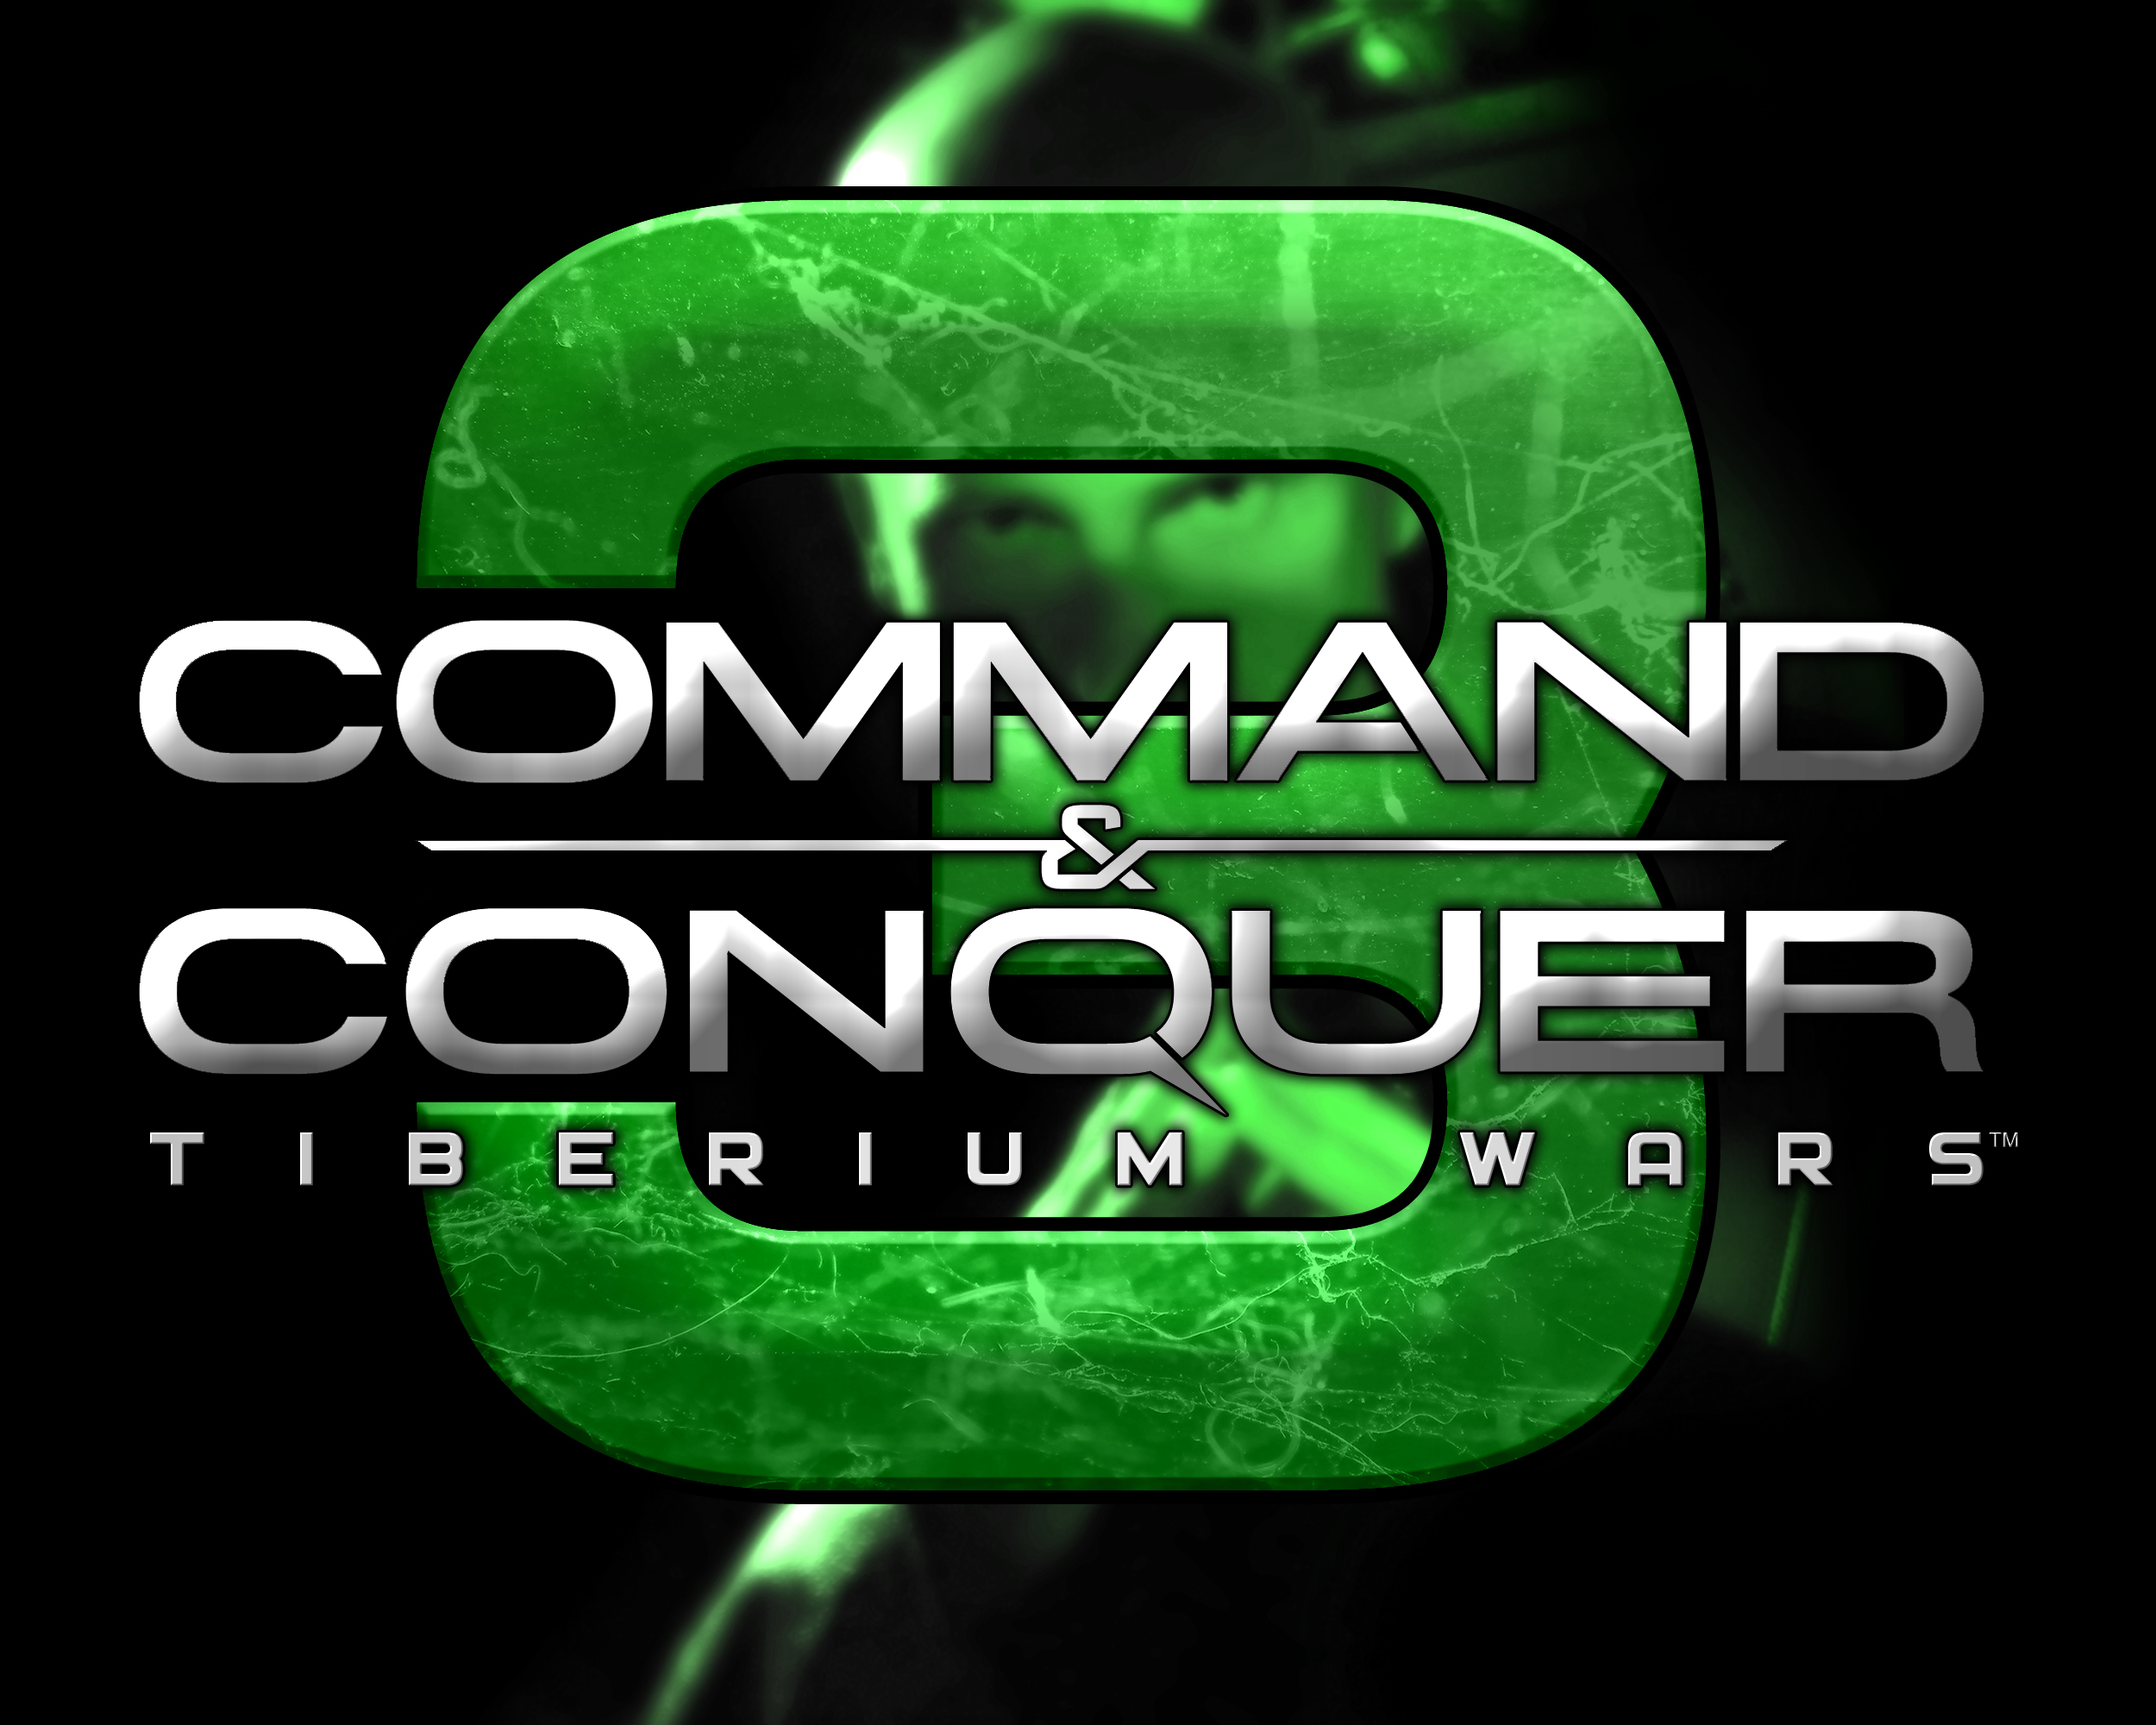 Command And Conquer 3 Tiberium Wars | НОД | Болотная война